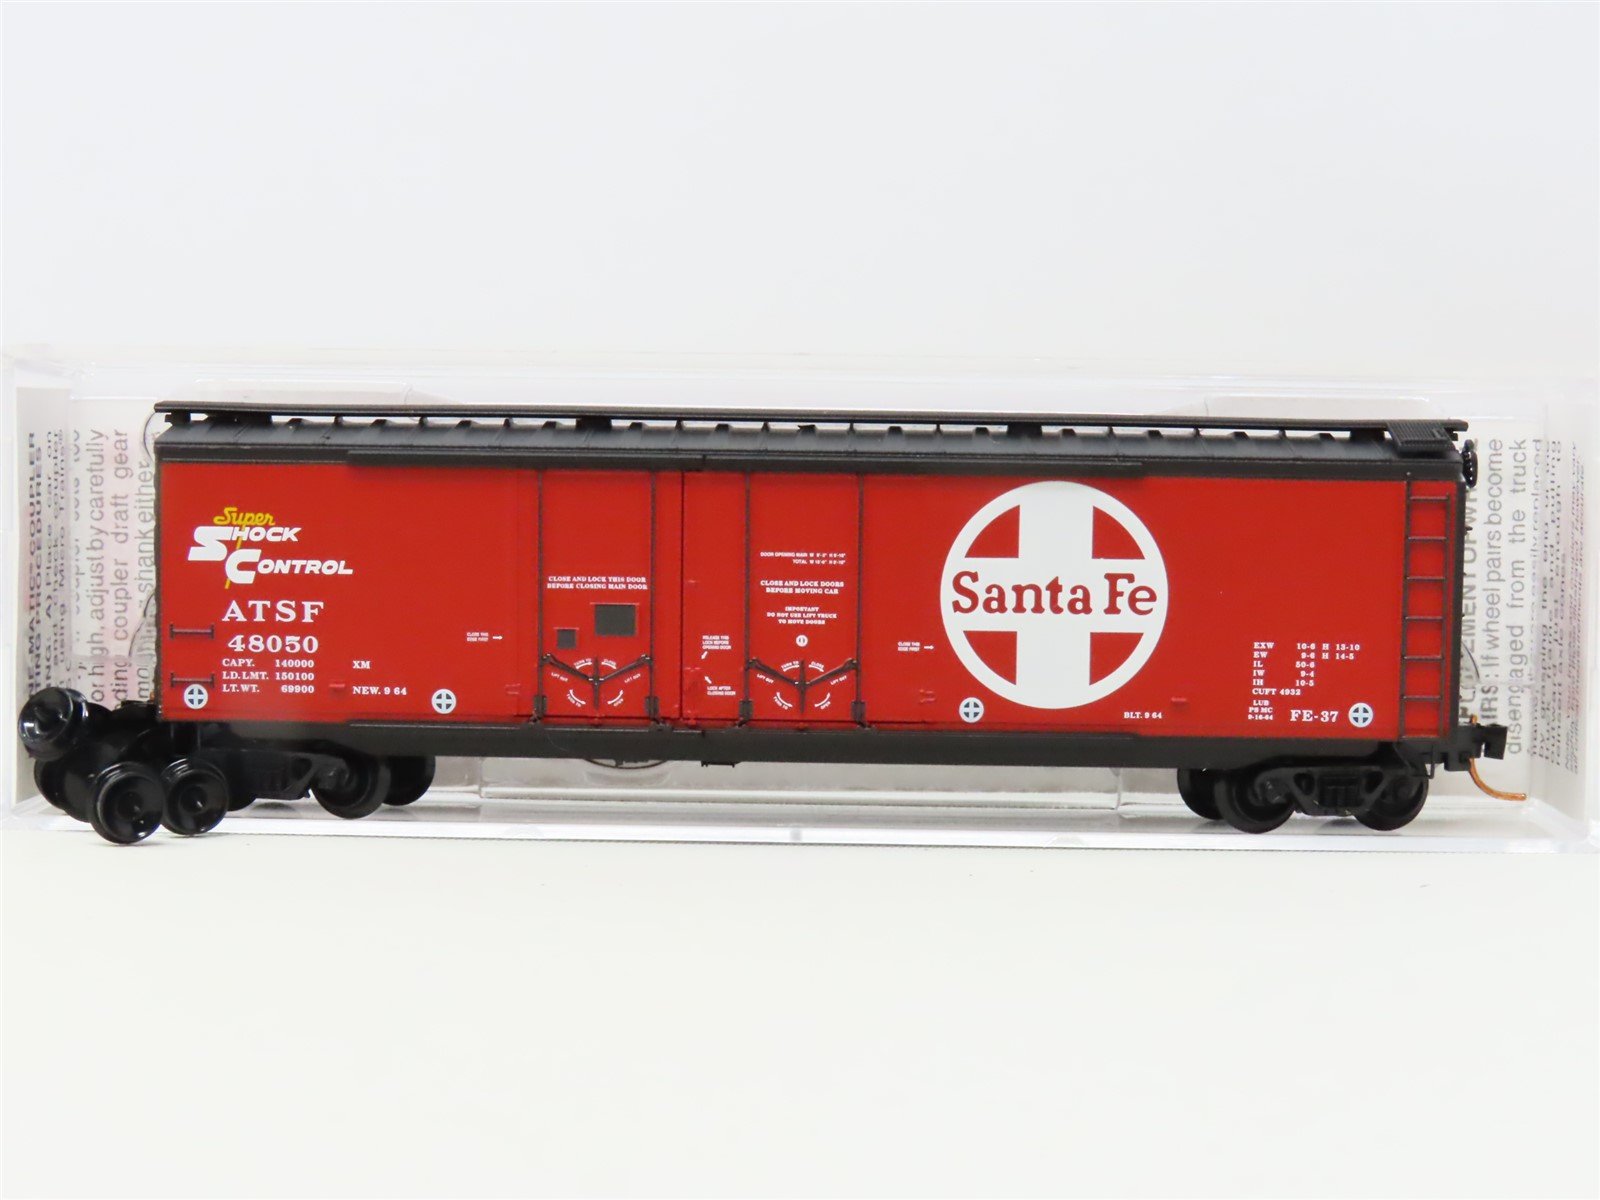 N Scale Micro-Trains MTL 03600070 ATSF Santa Fe Shock Control 50' Box Car #48050